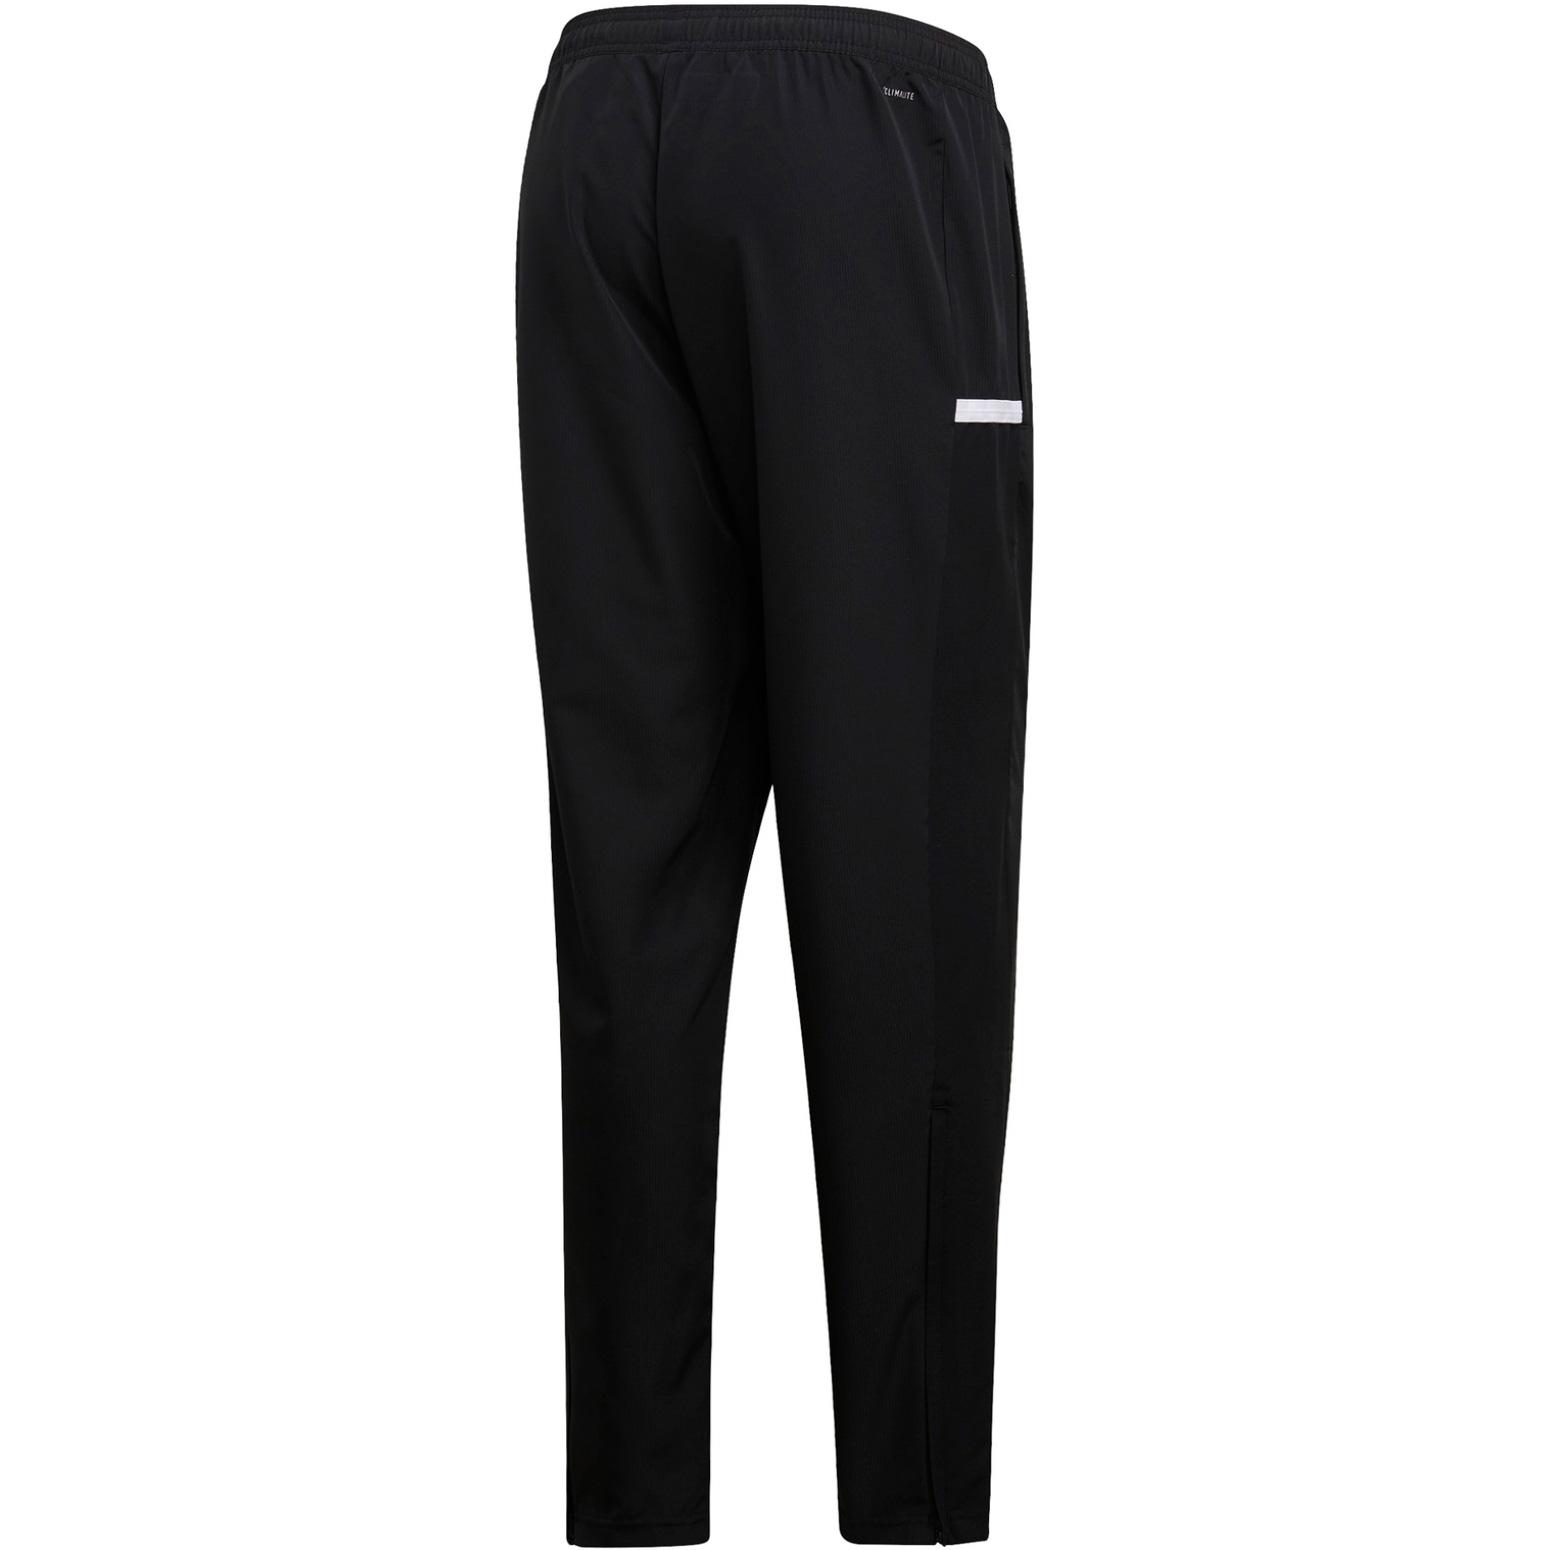 Adidas Mens Team 19 Woven Pants - Black - Tennisnuts.com